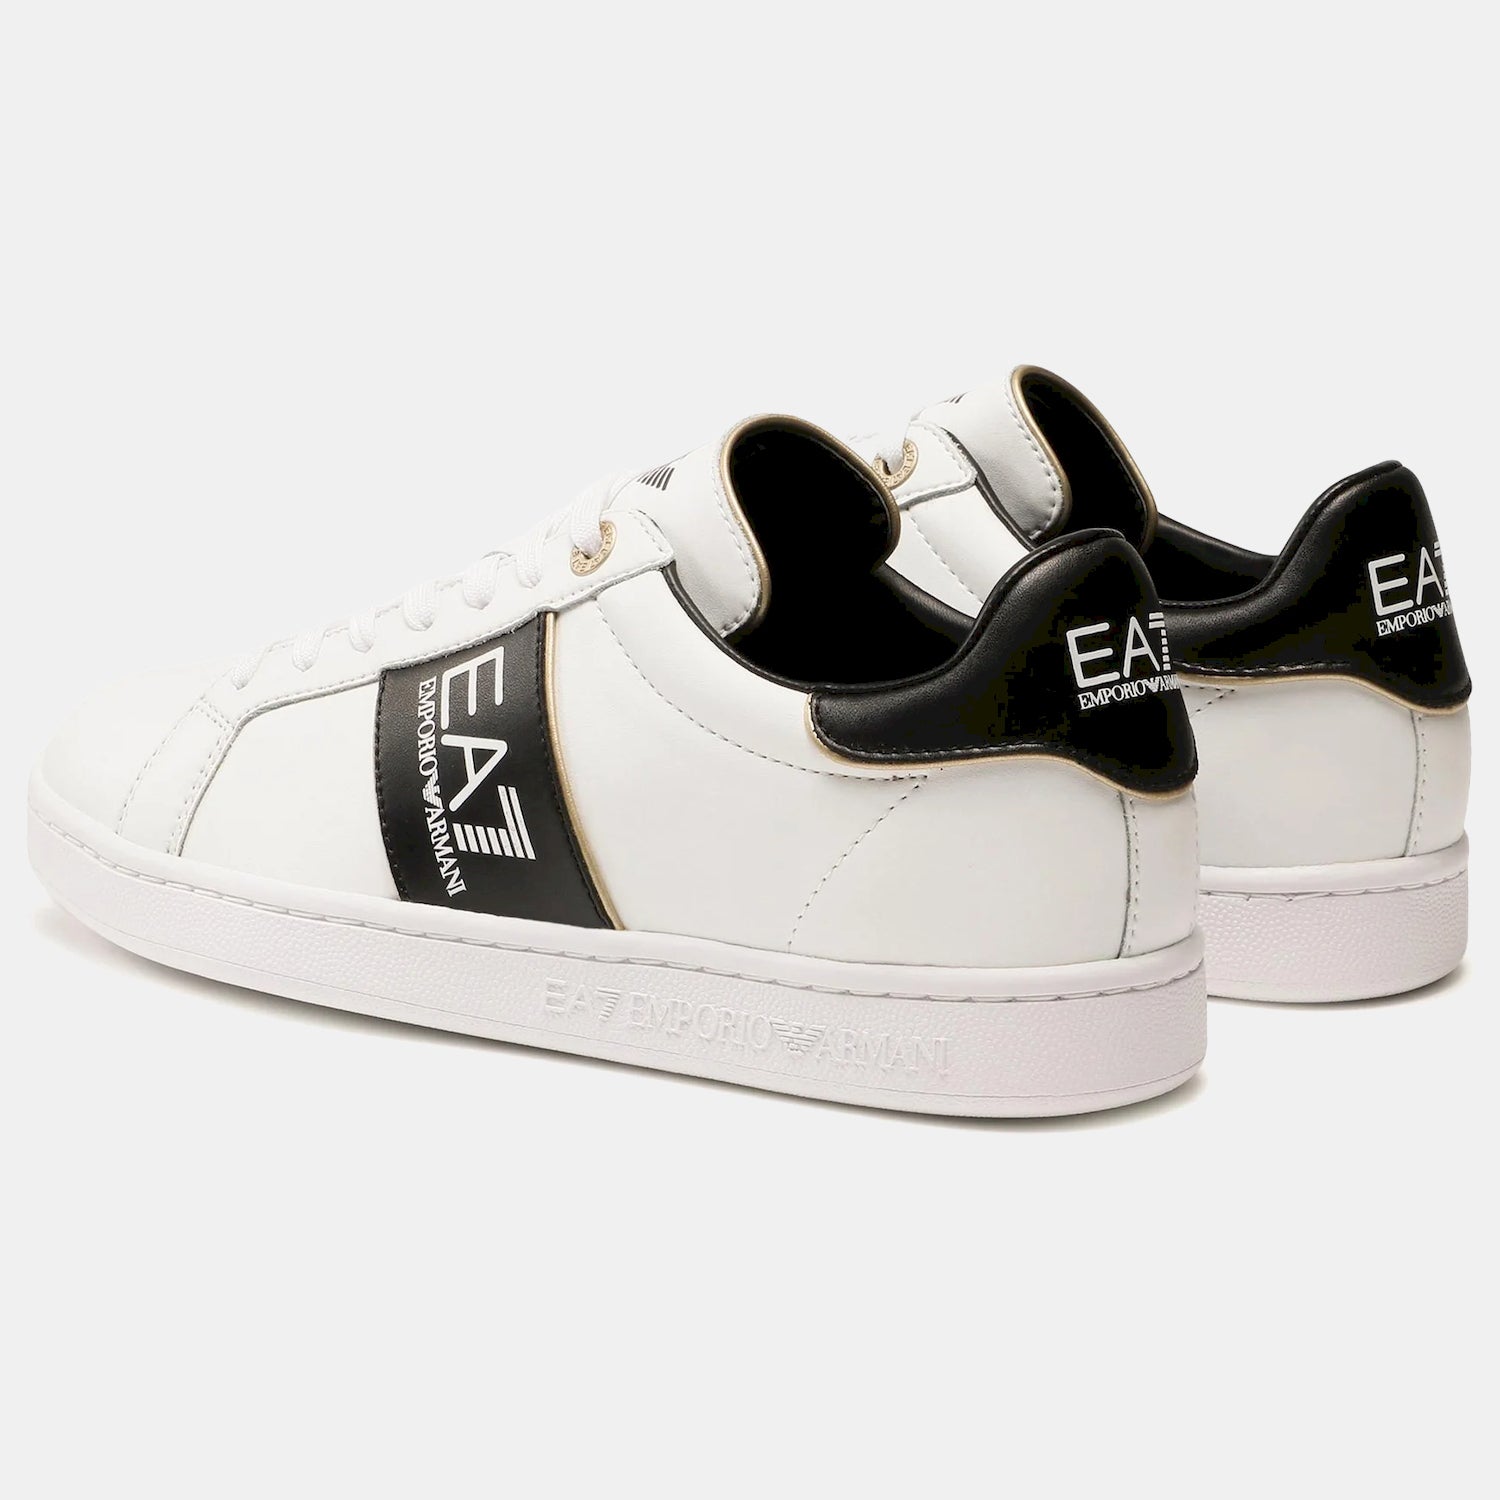 Emporio Armani Ea7 Sapatilhas Sneakers Shoes X8x102 Xk346 Whi Black Branco Preto_shot2